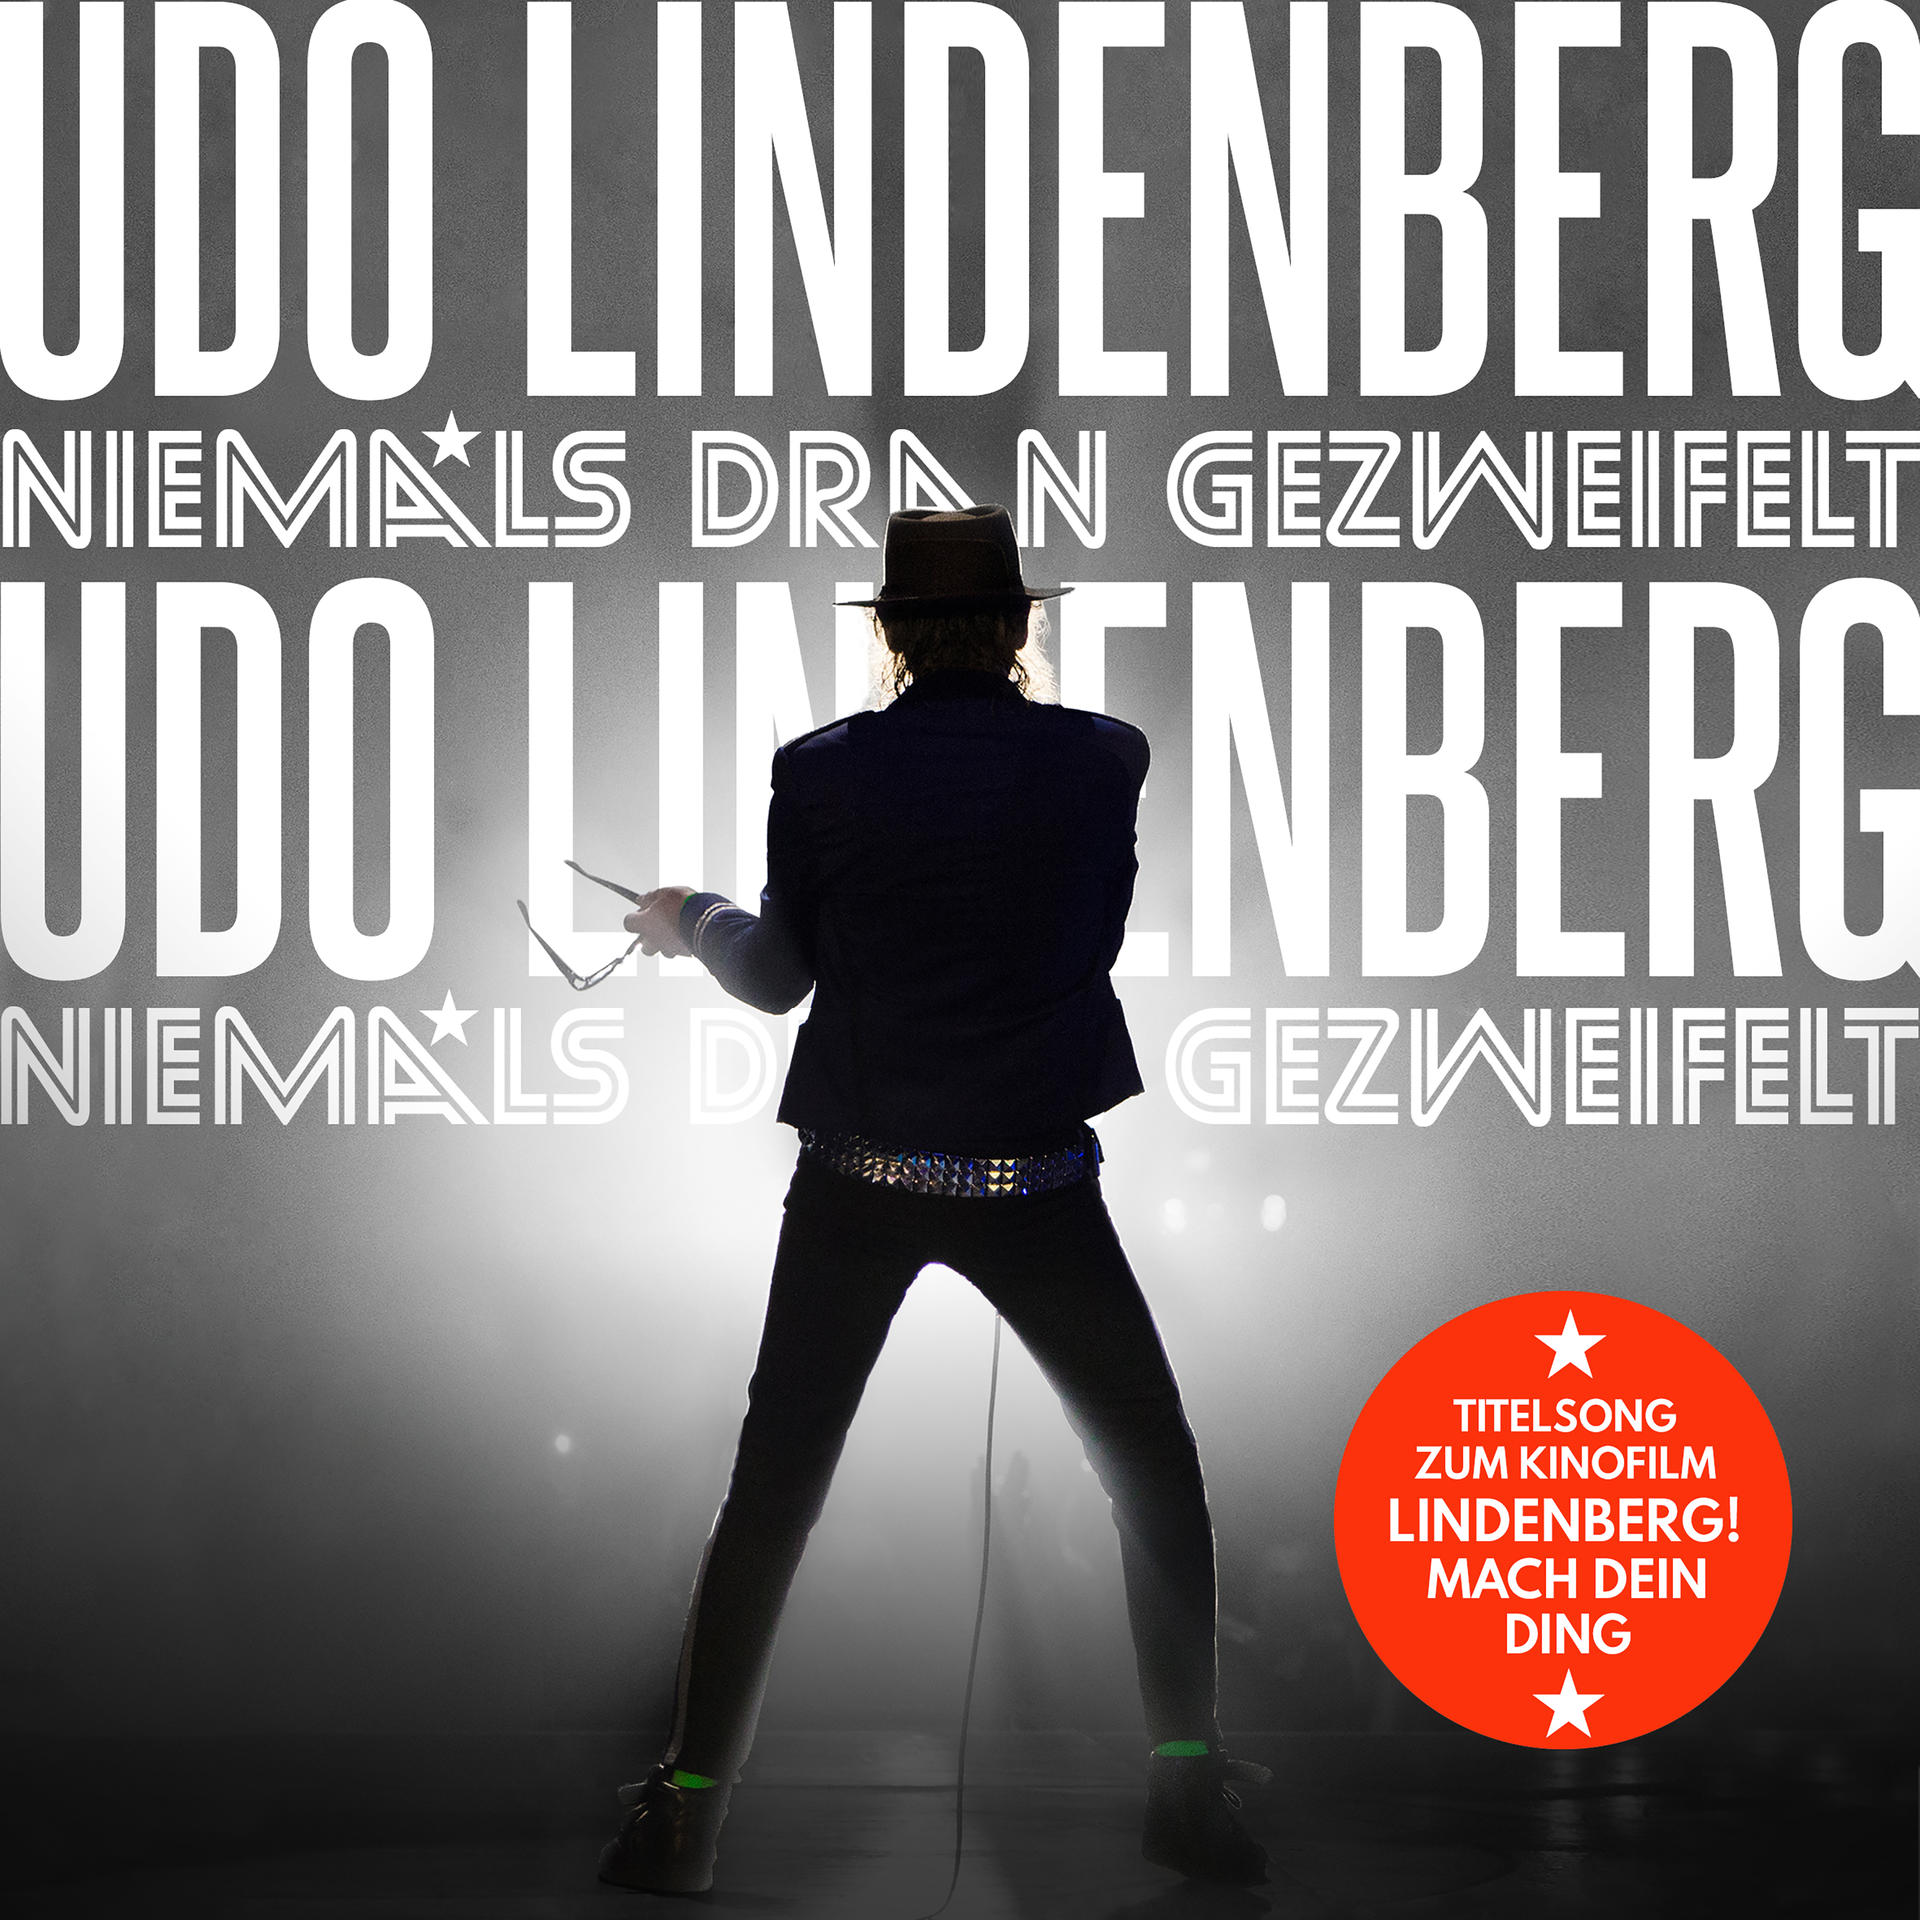 Single - Lindenberg (Maxi CD) Udo - dran gezweifelt Niemals